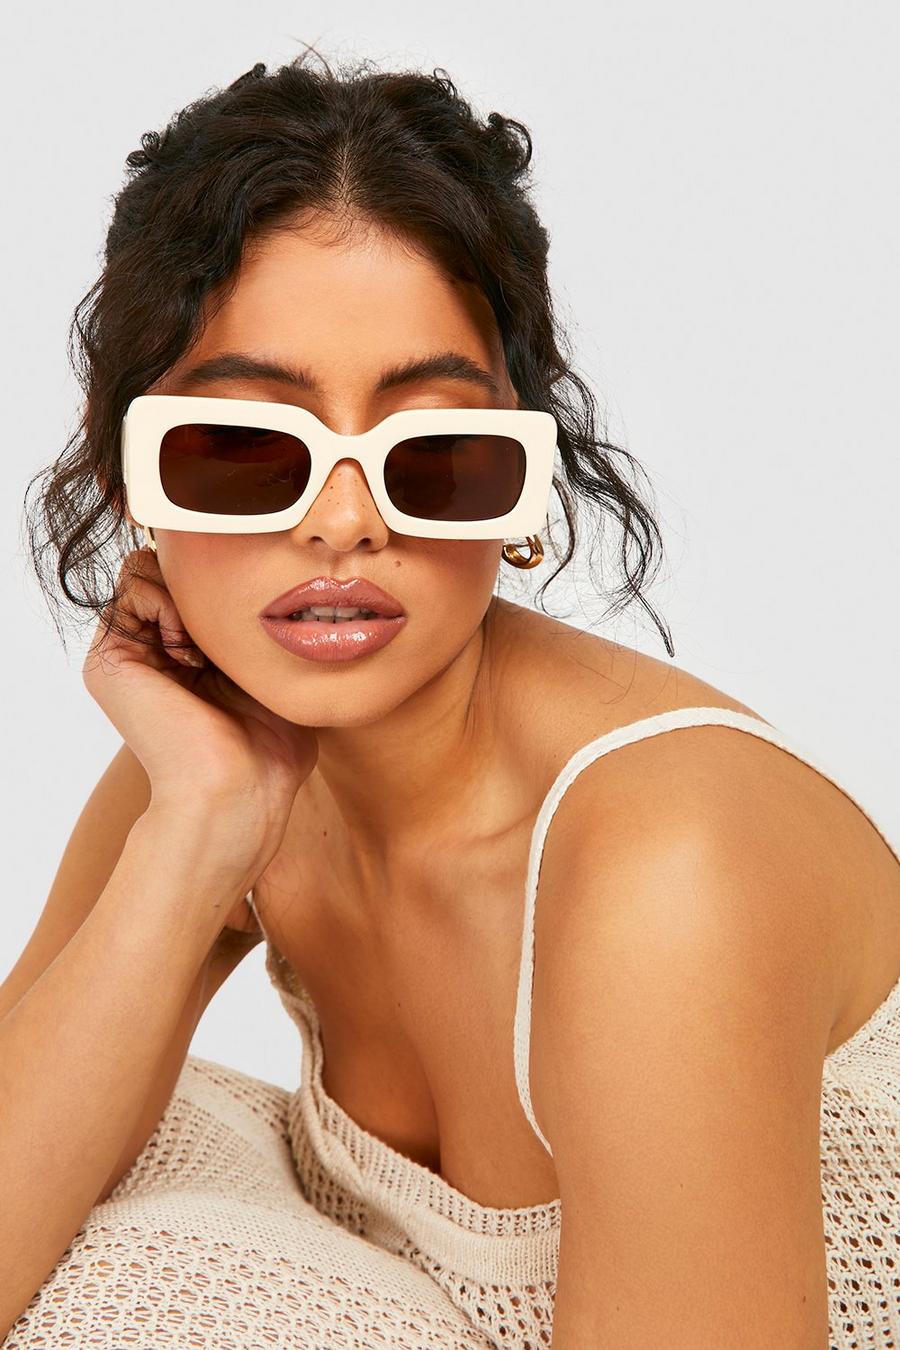 Promo Sunglasses